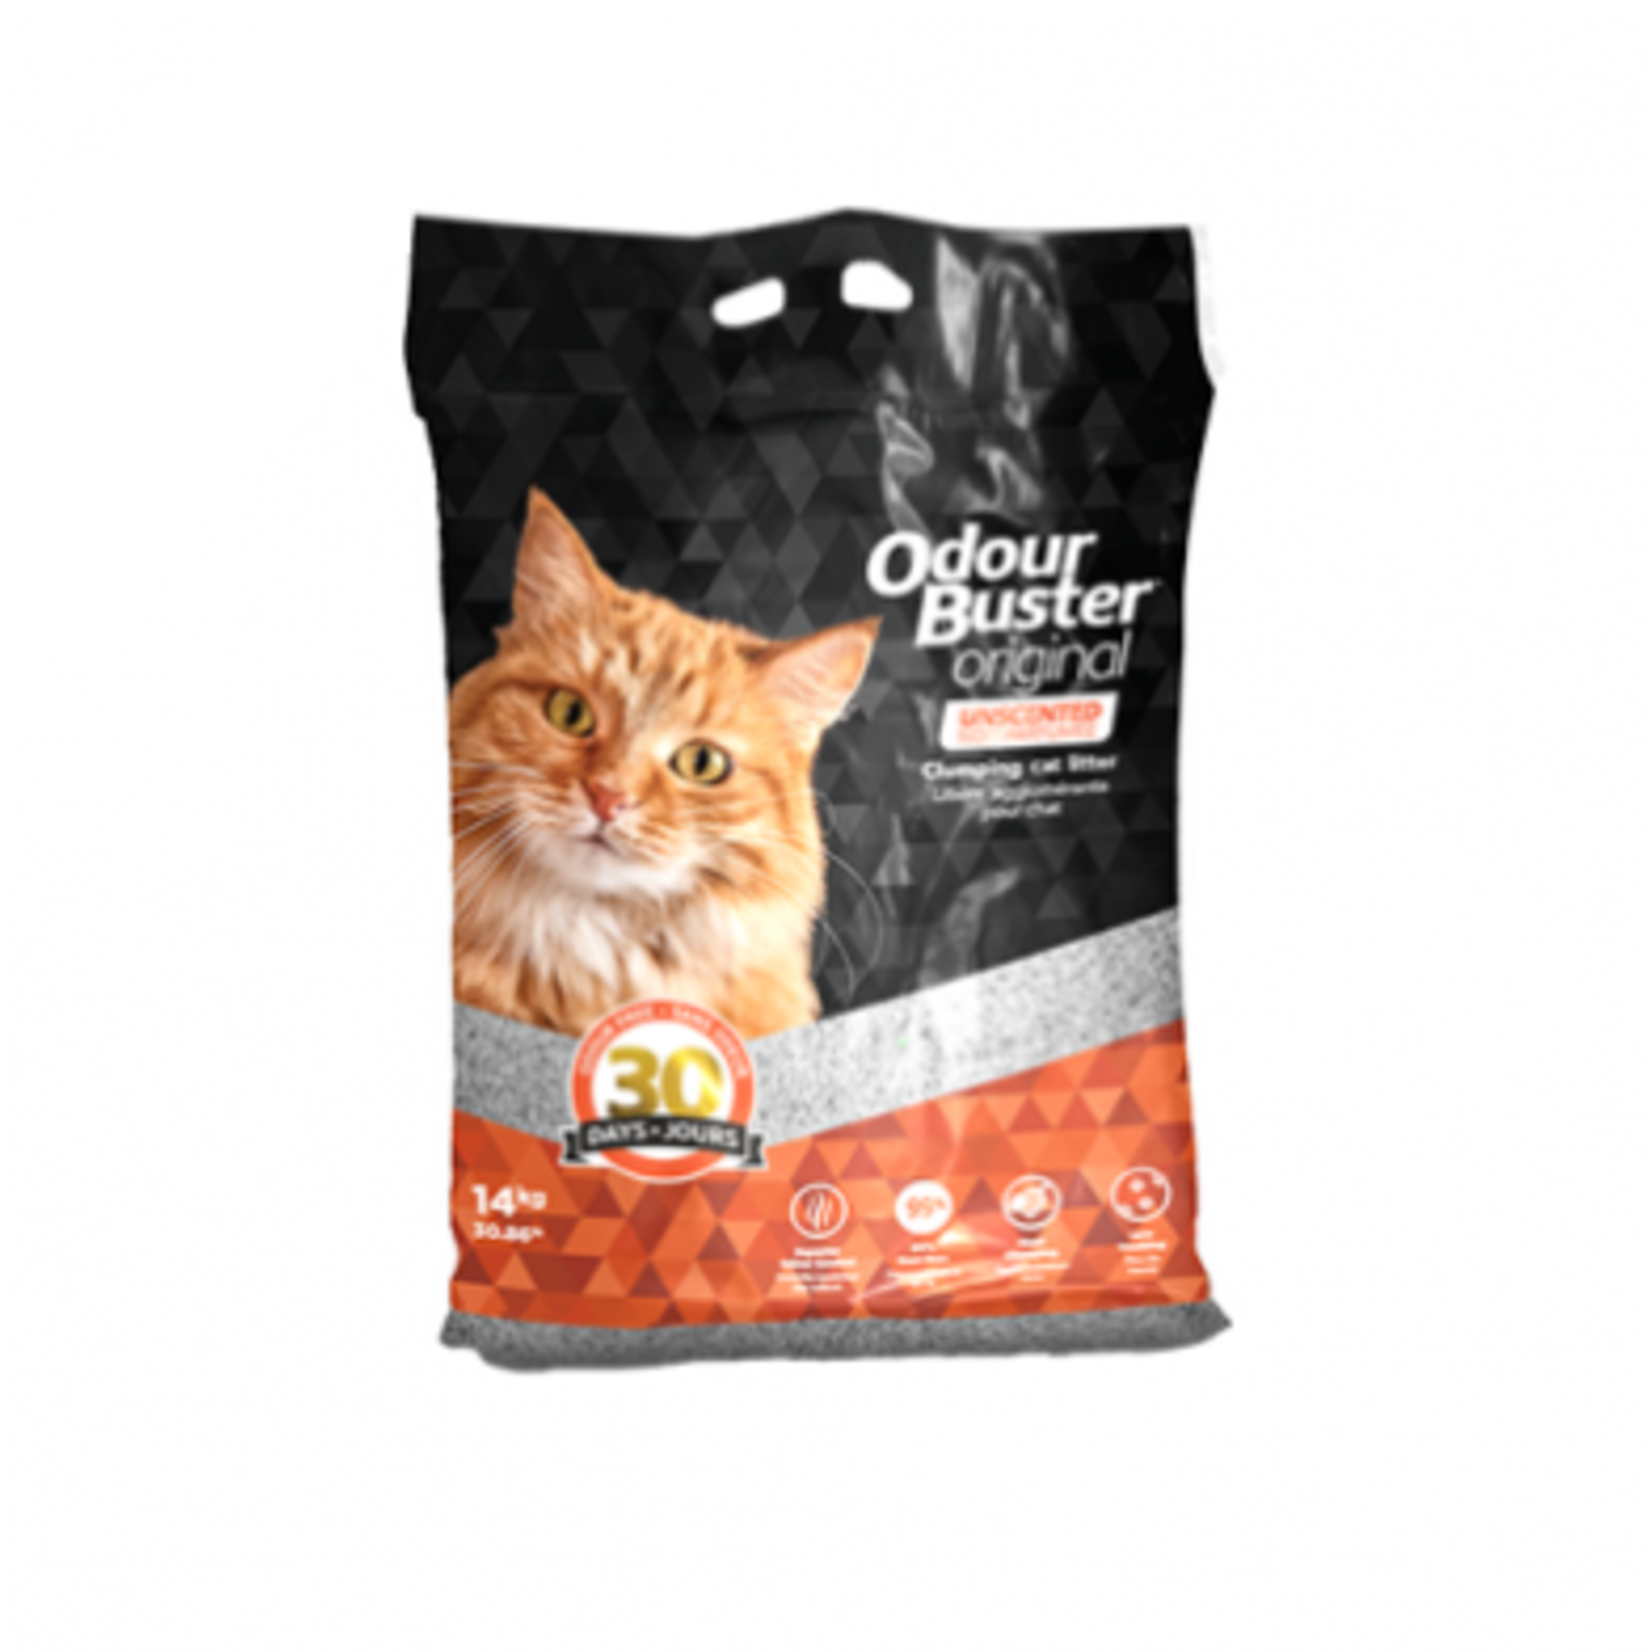 Odour Buster Original - Premium Cat Litter - 14 kg